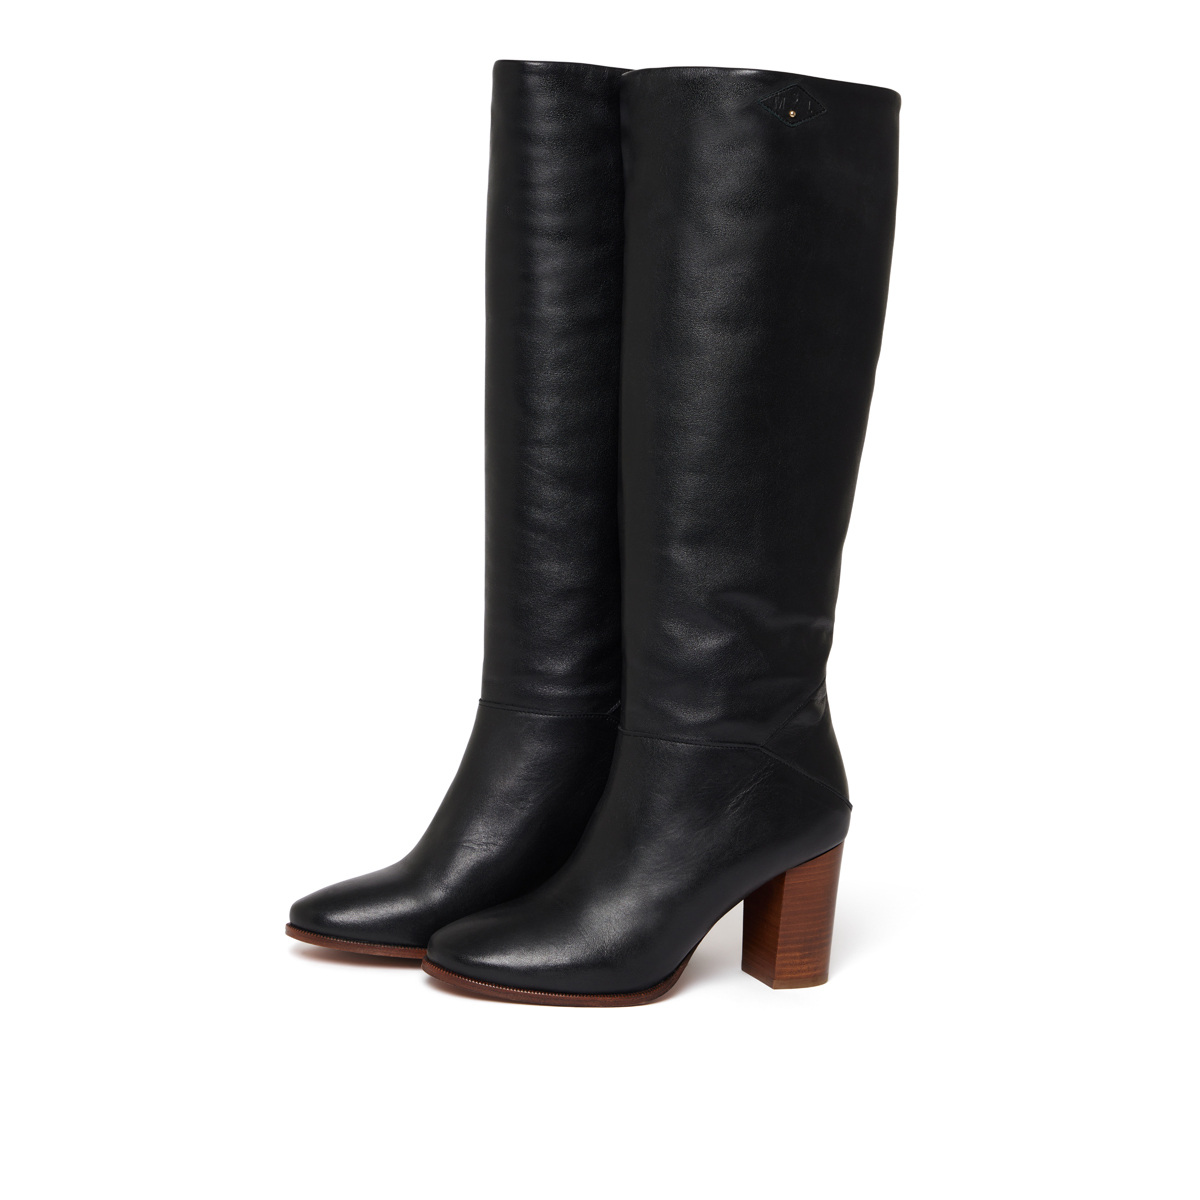 Angelina boots, Black - leather - image 1